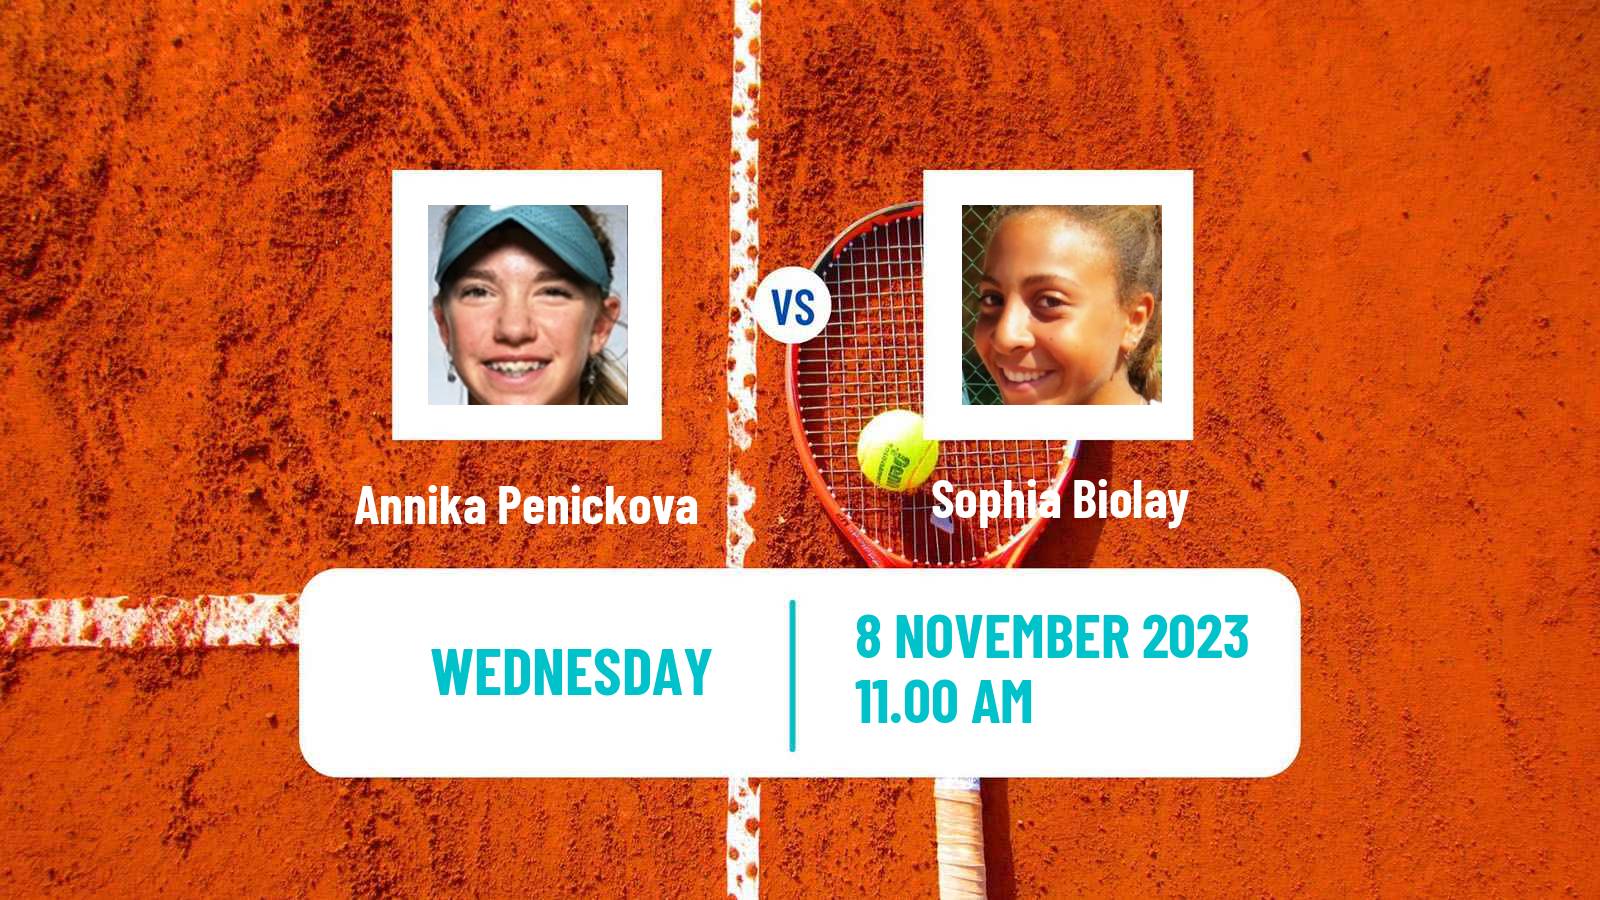 Tennis ITF W15 Champaign Il Women Annika Penickova - Sophia Biolay